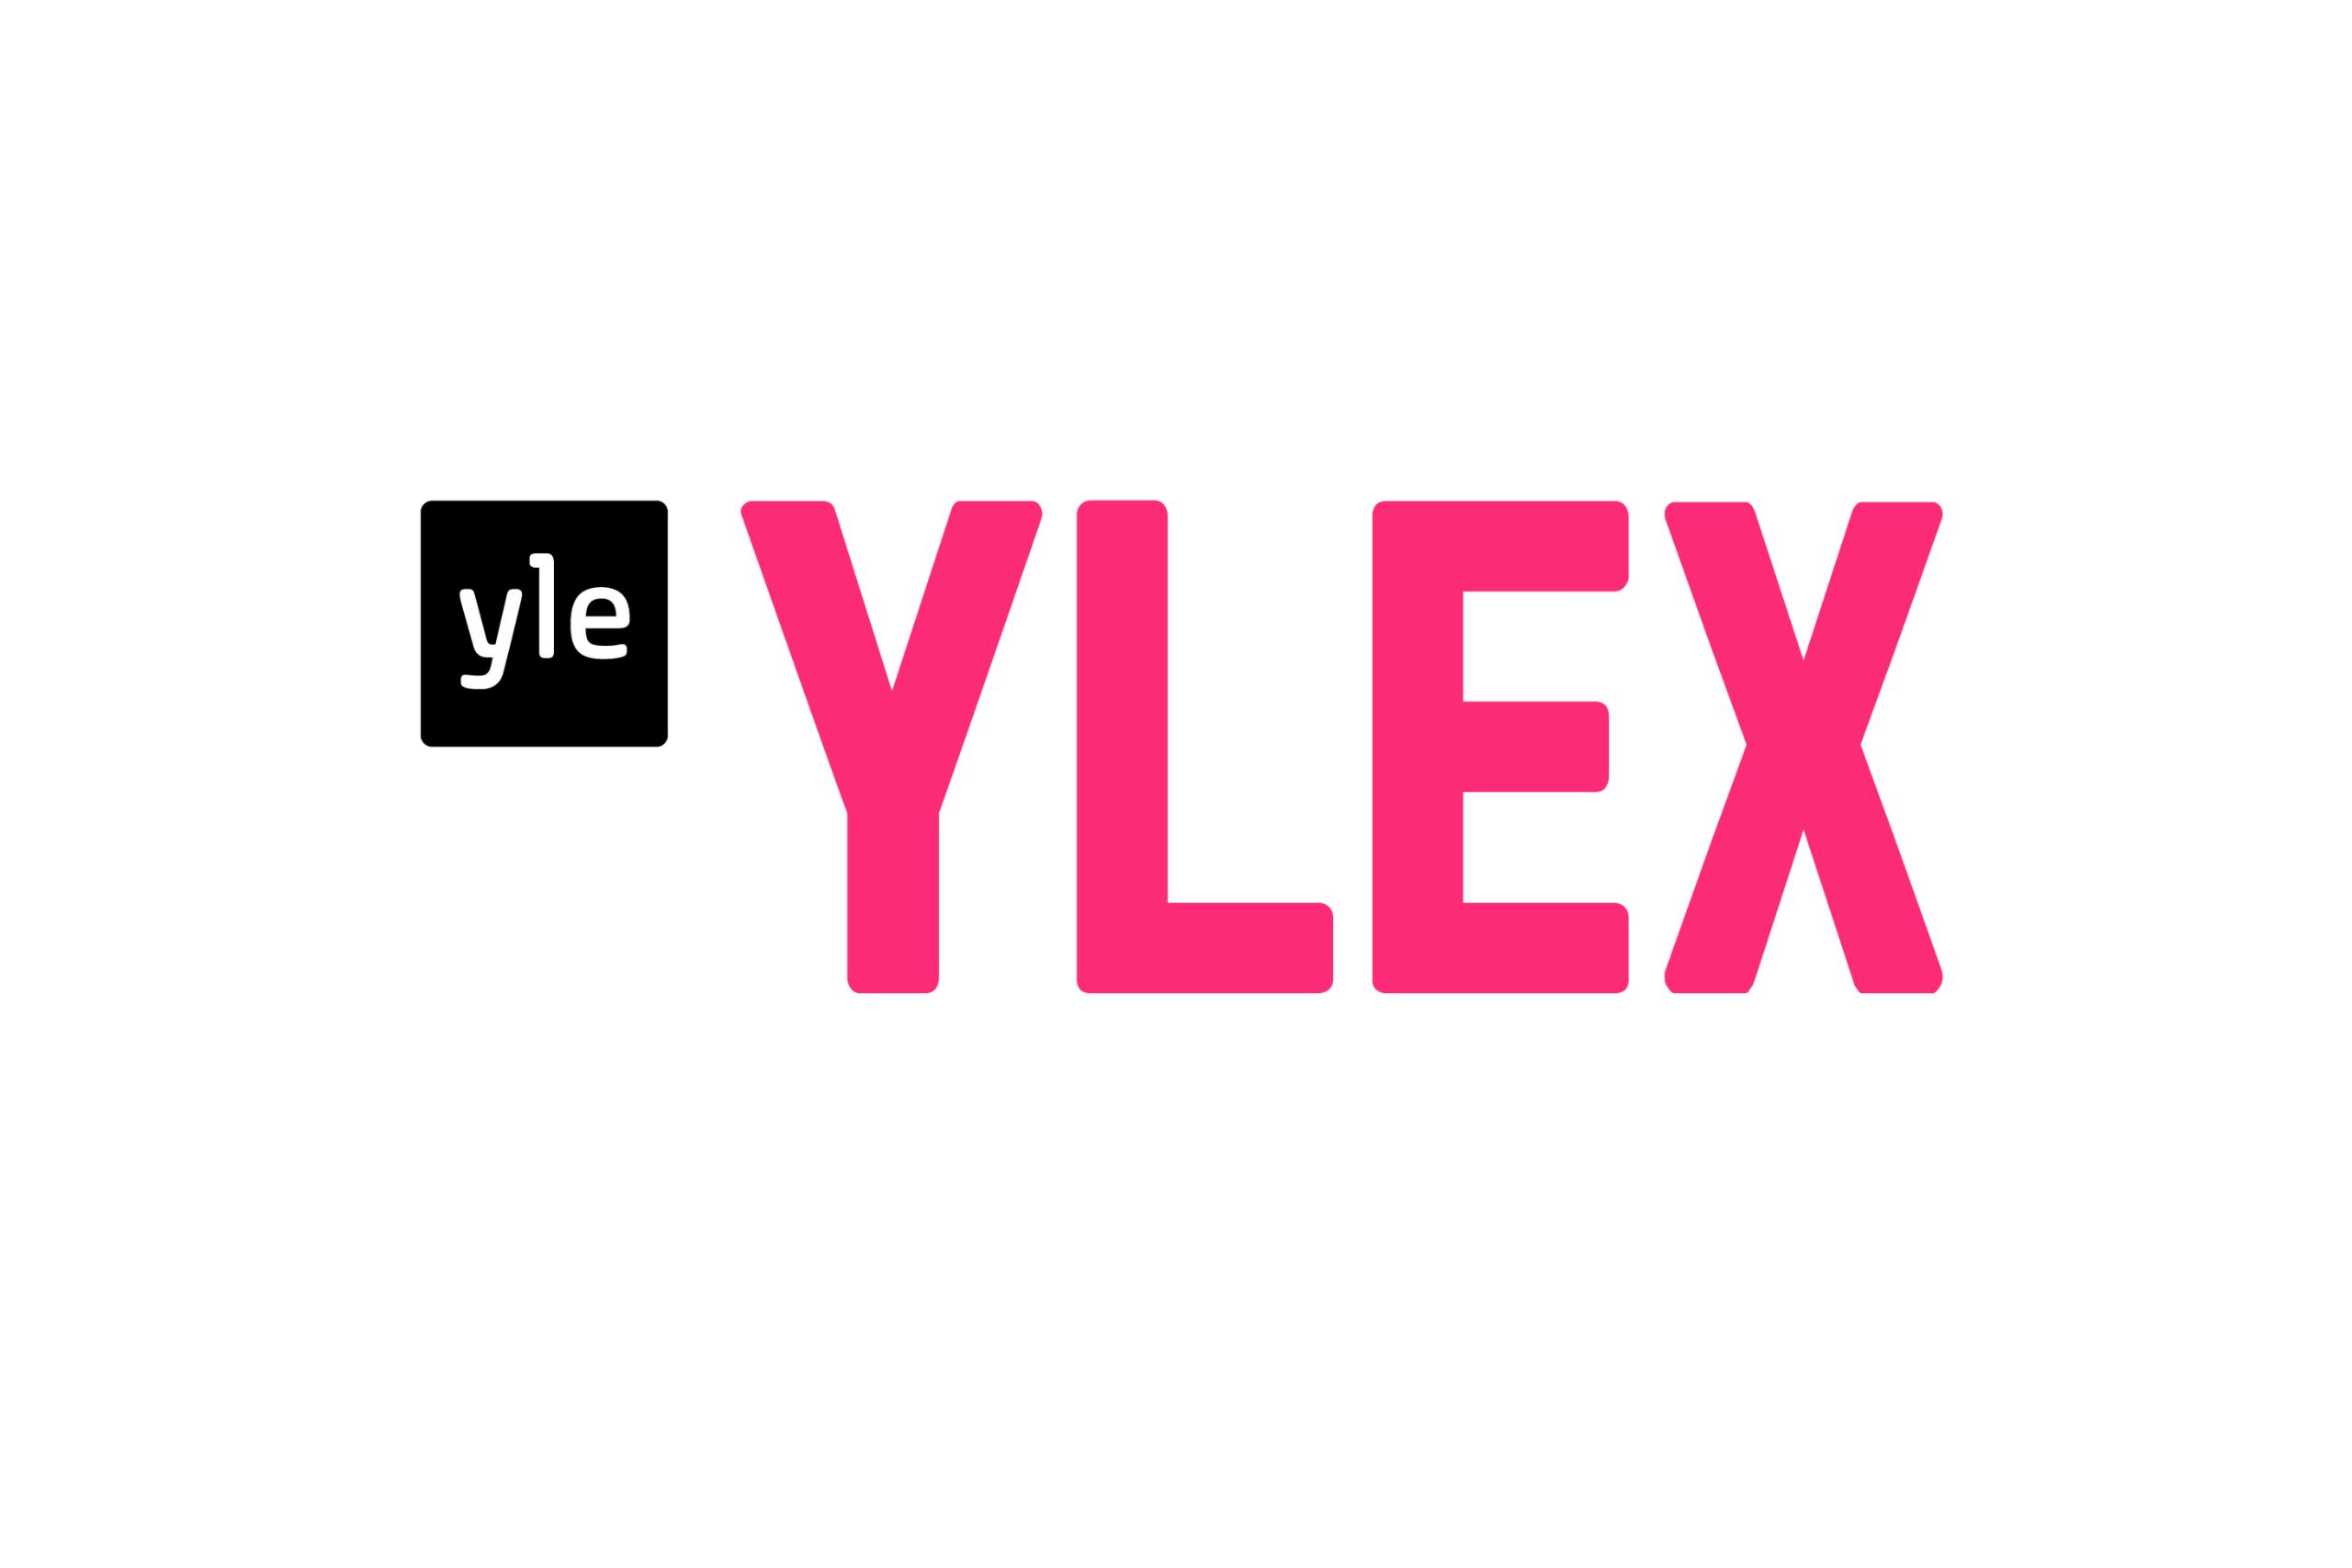 YleX